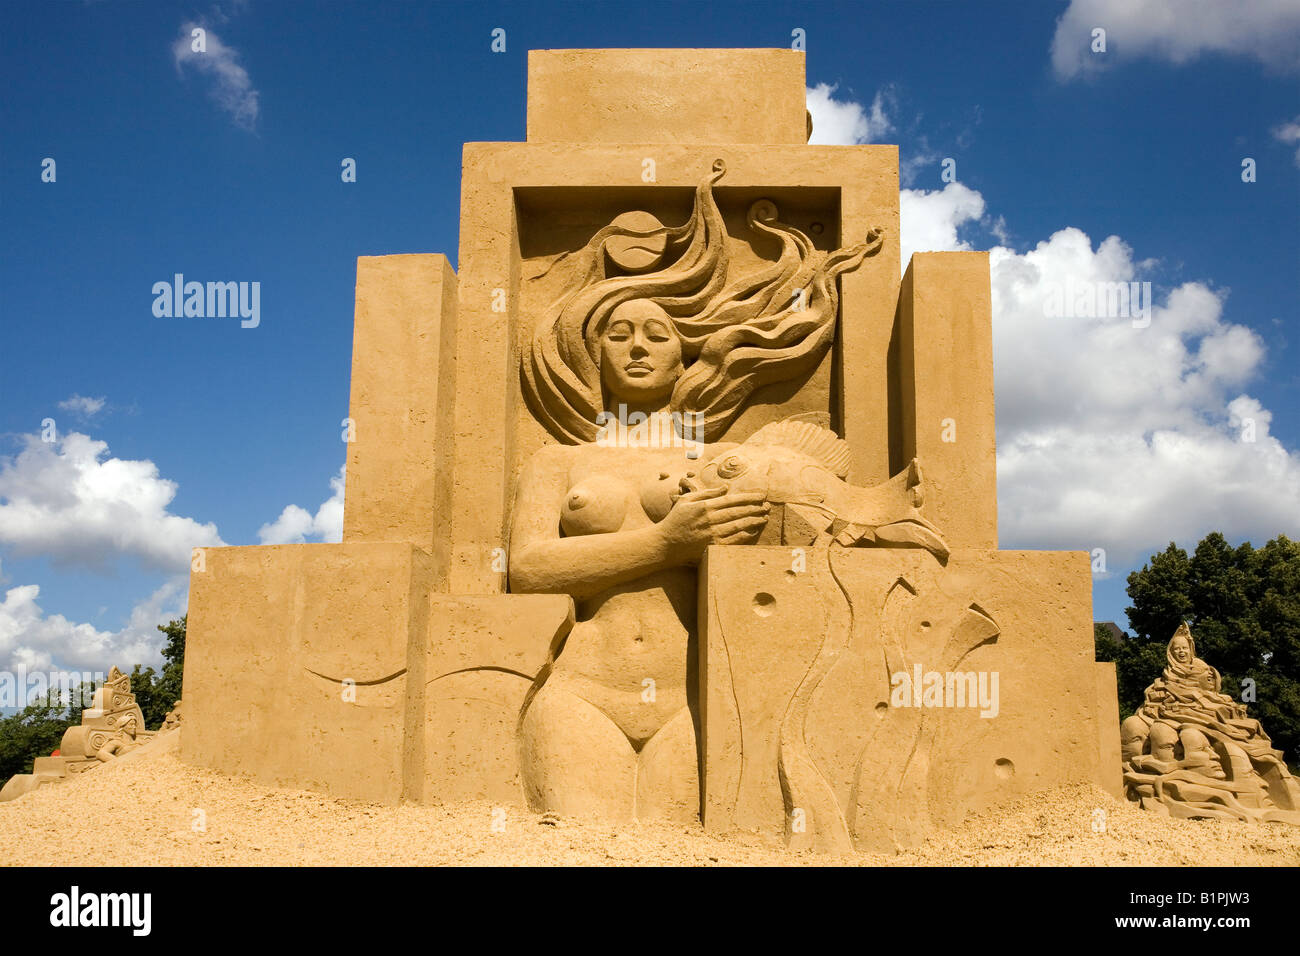 Sandsation - Sand Sculptures in Berlin, Germany Stock Photo